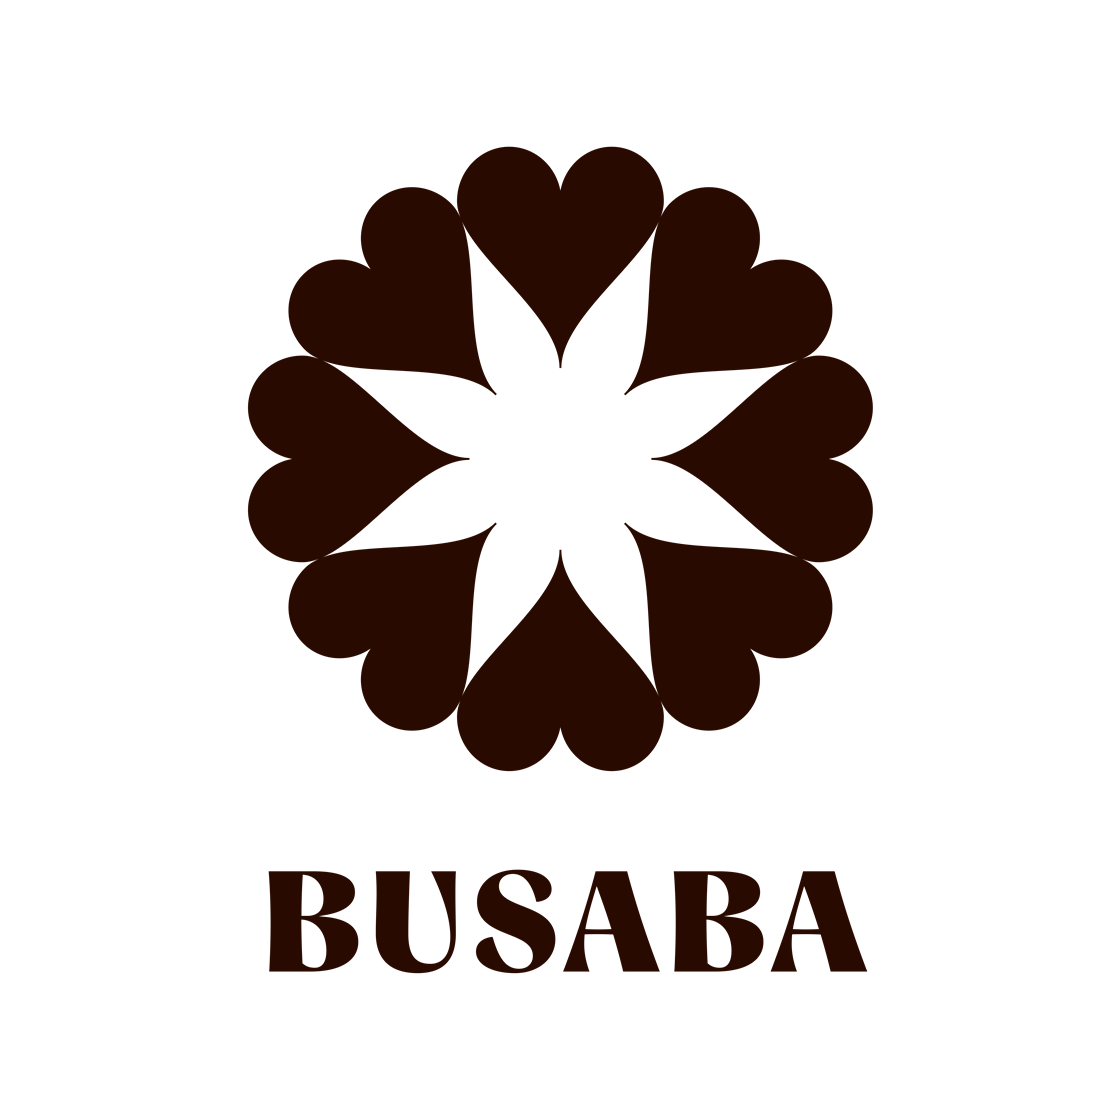 Busaba unveils new brand identity | News | MCA Insight